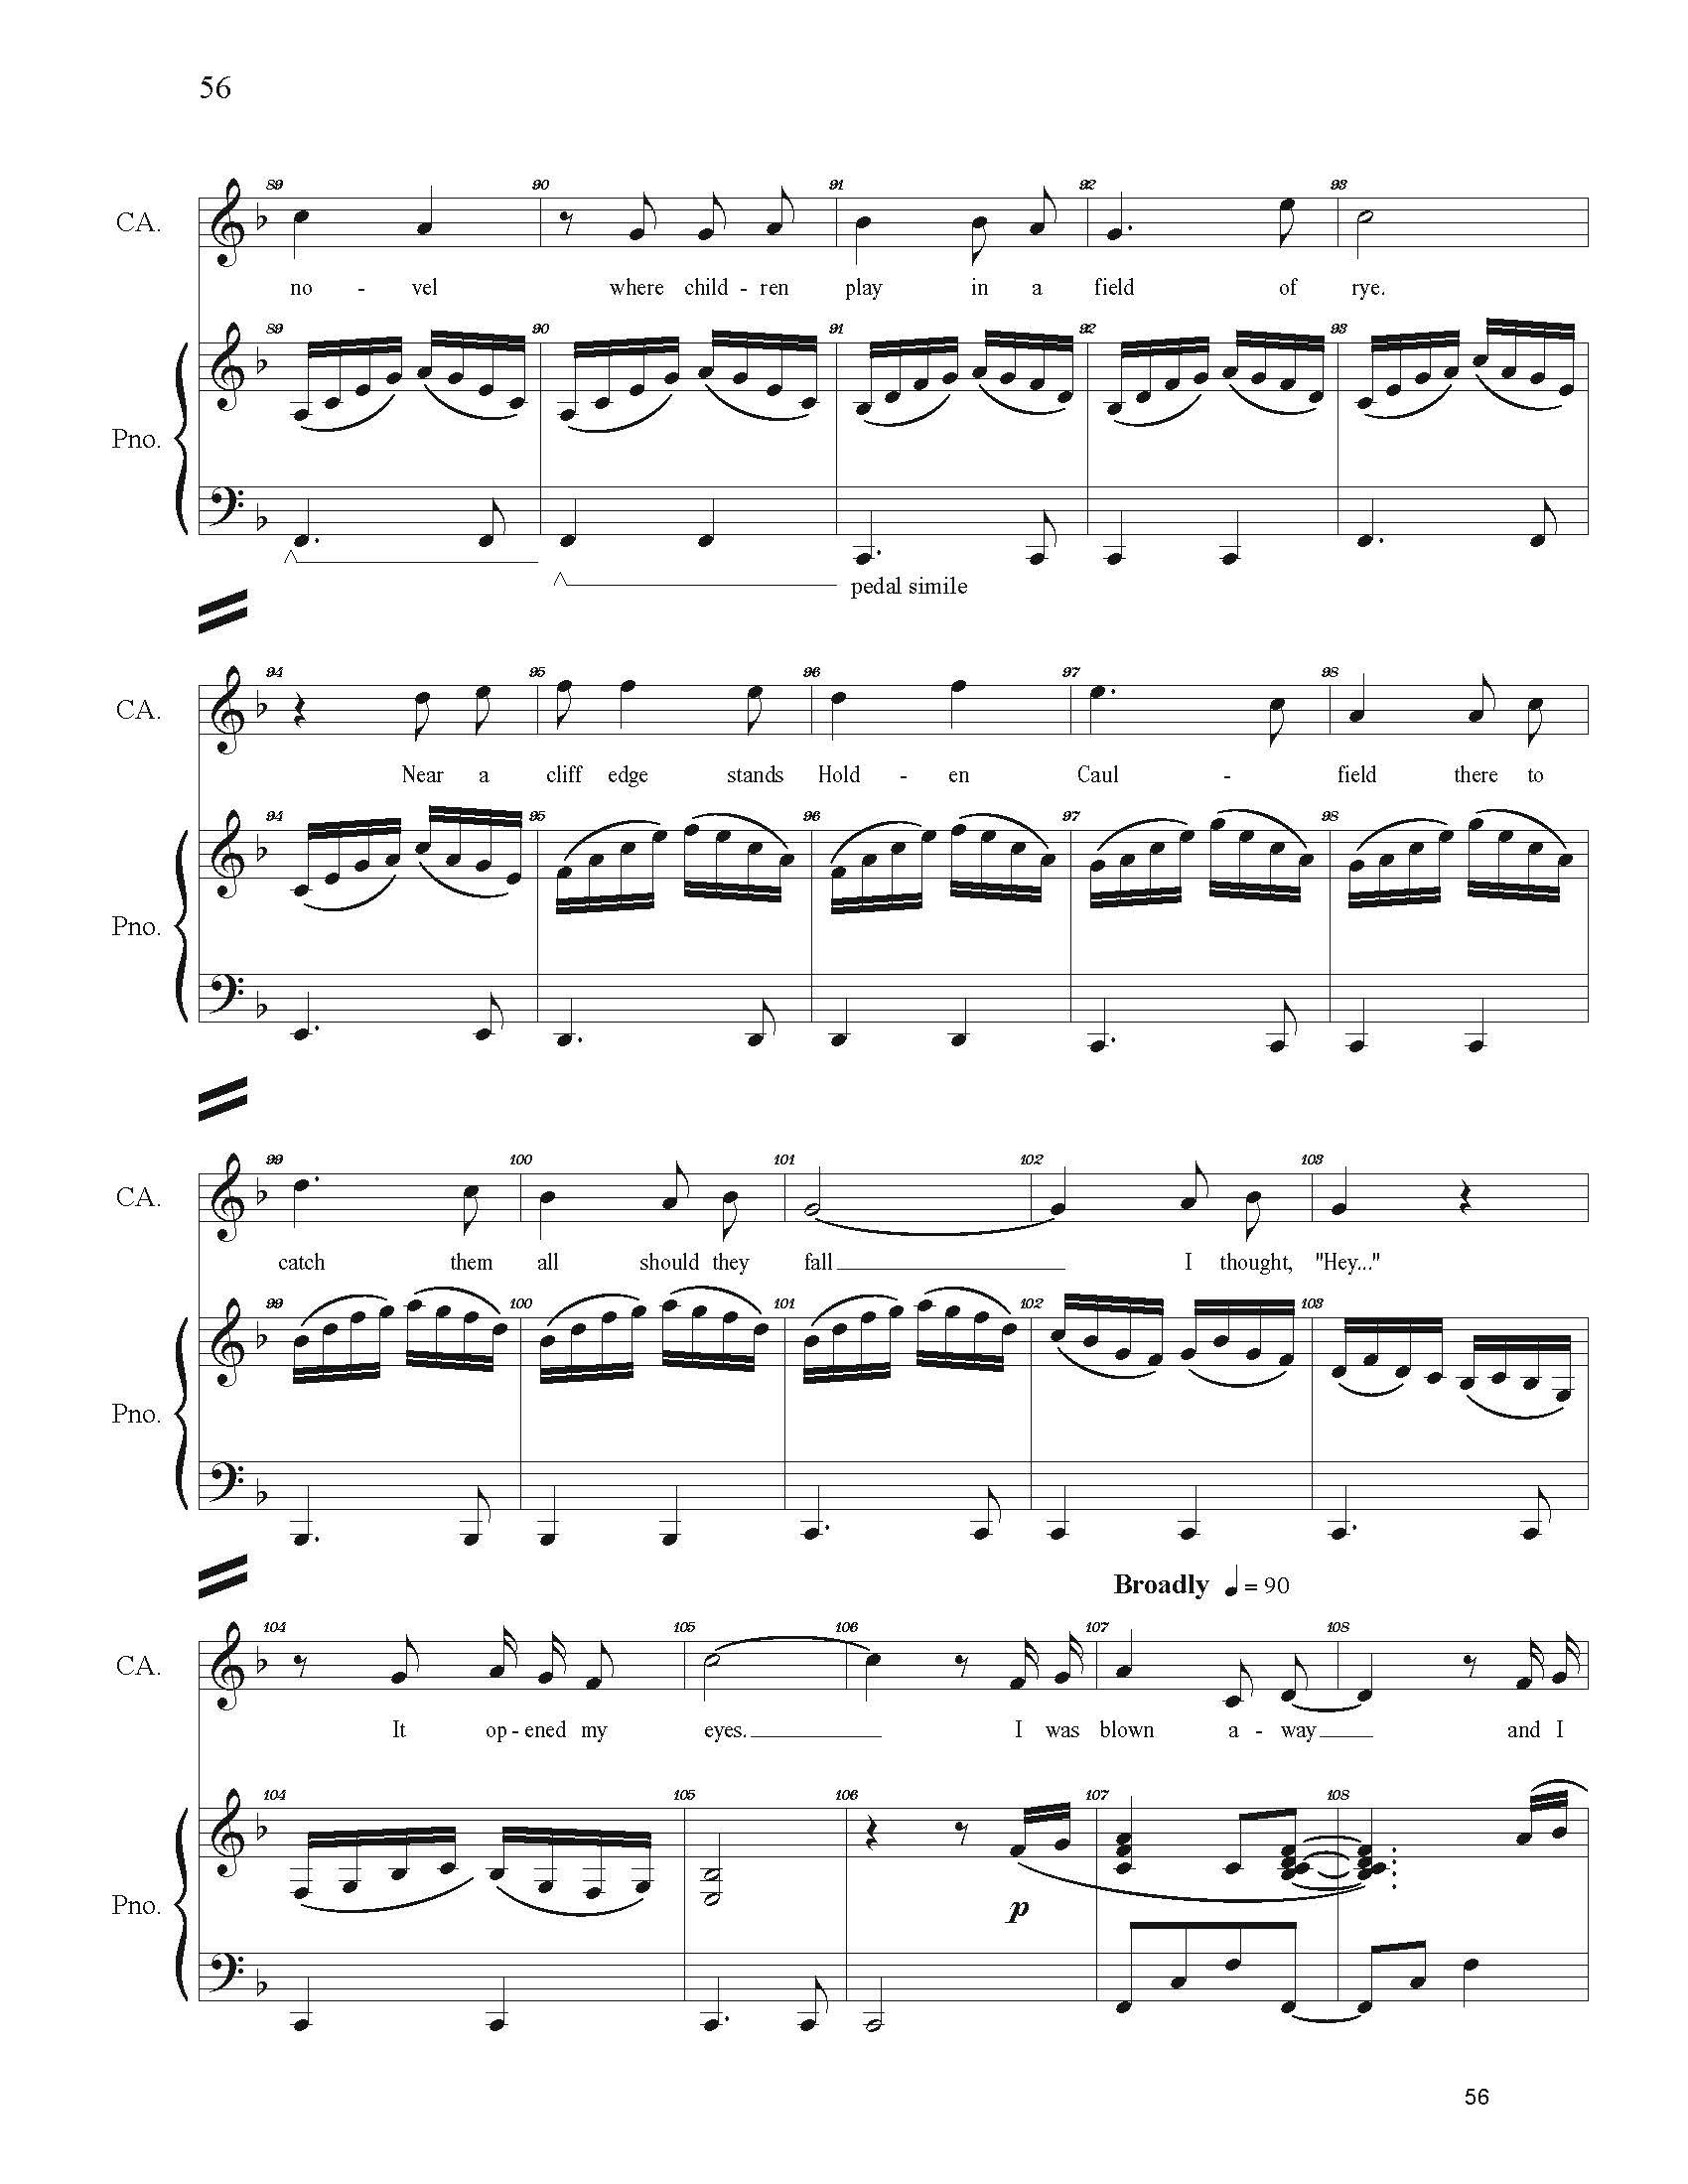 FULL PIANO VOCAL SCORE DRAFT 1 - Score_Page_056.jpg